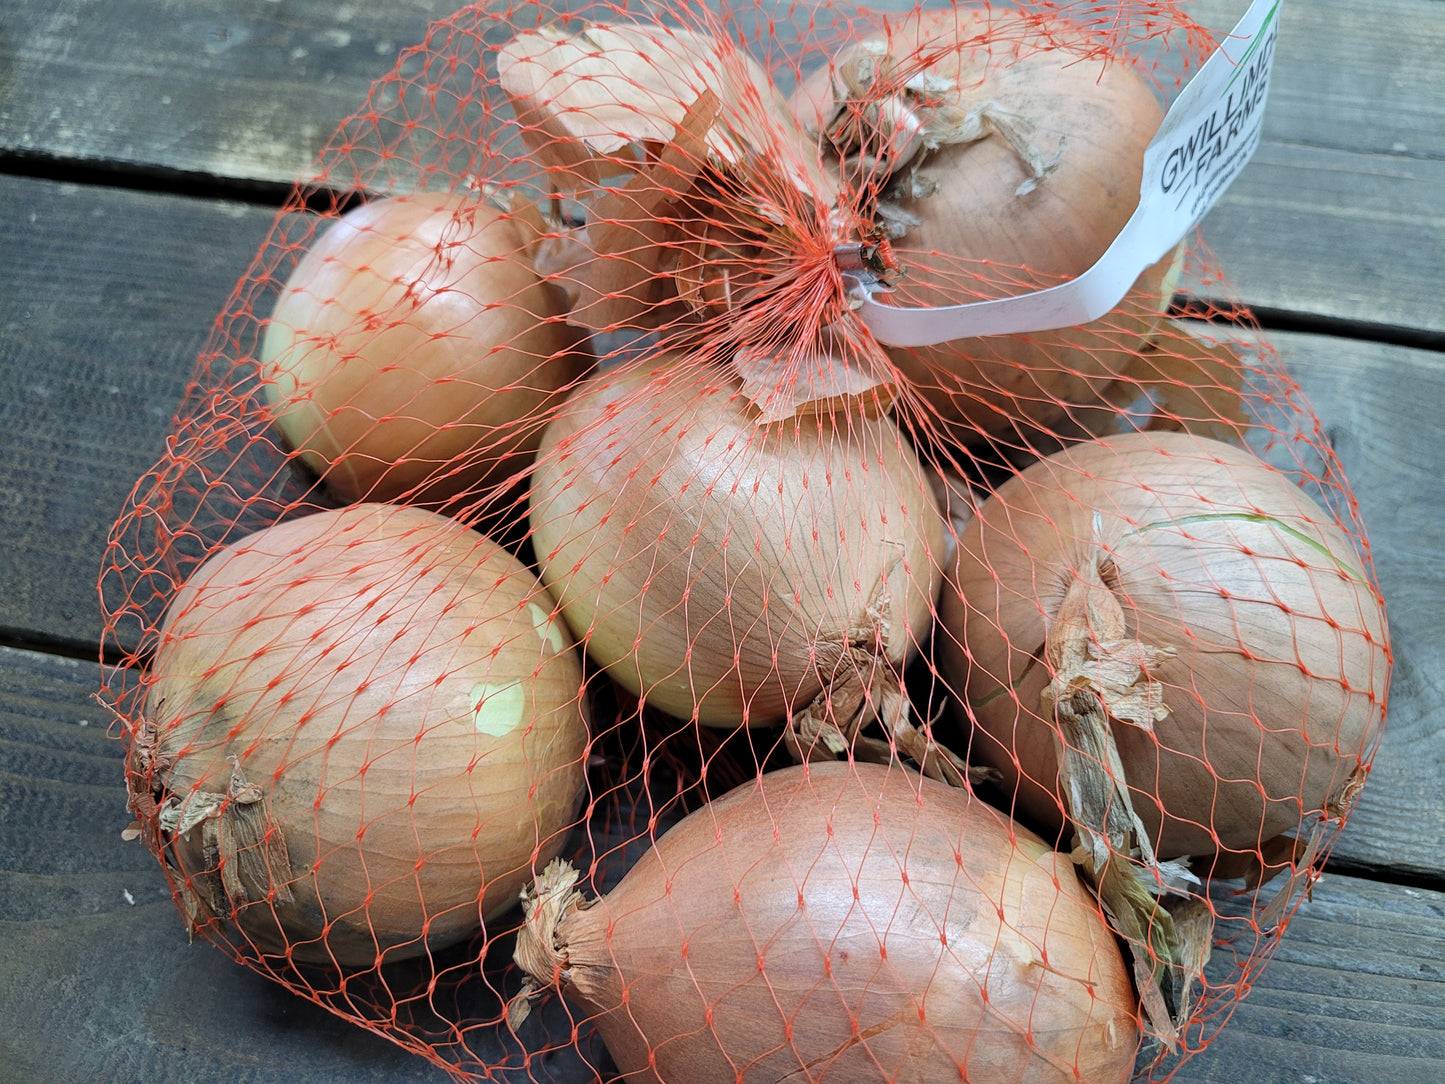 Spanish Onions - Local (Ontario)